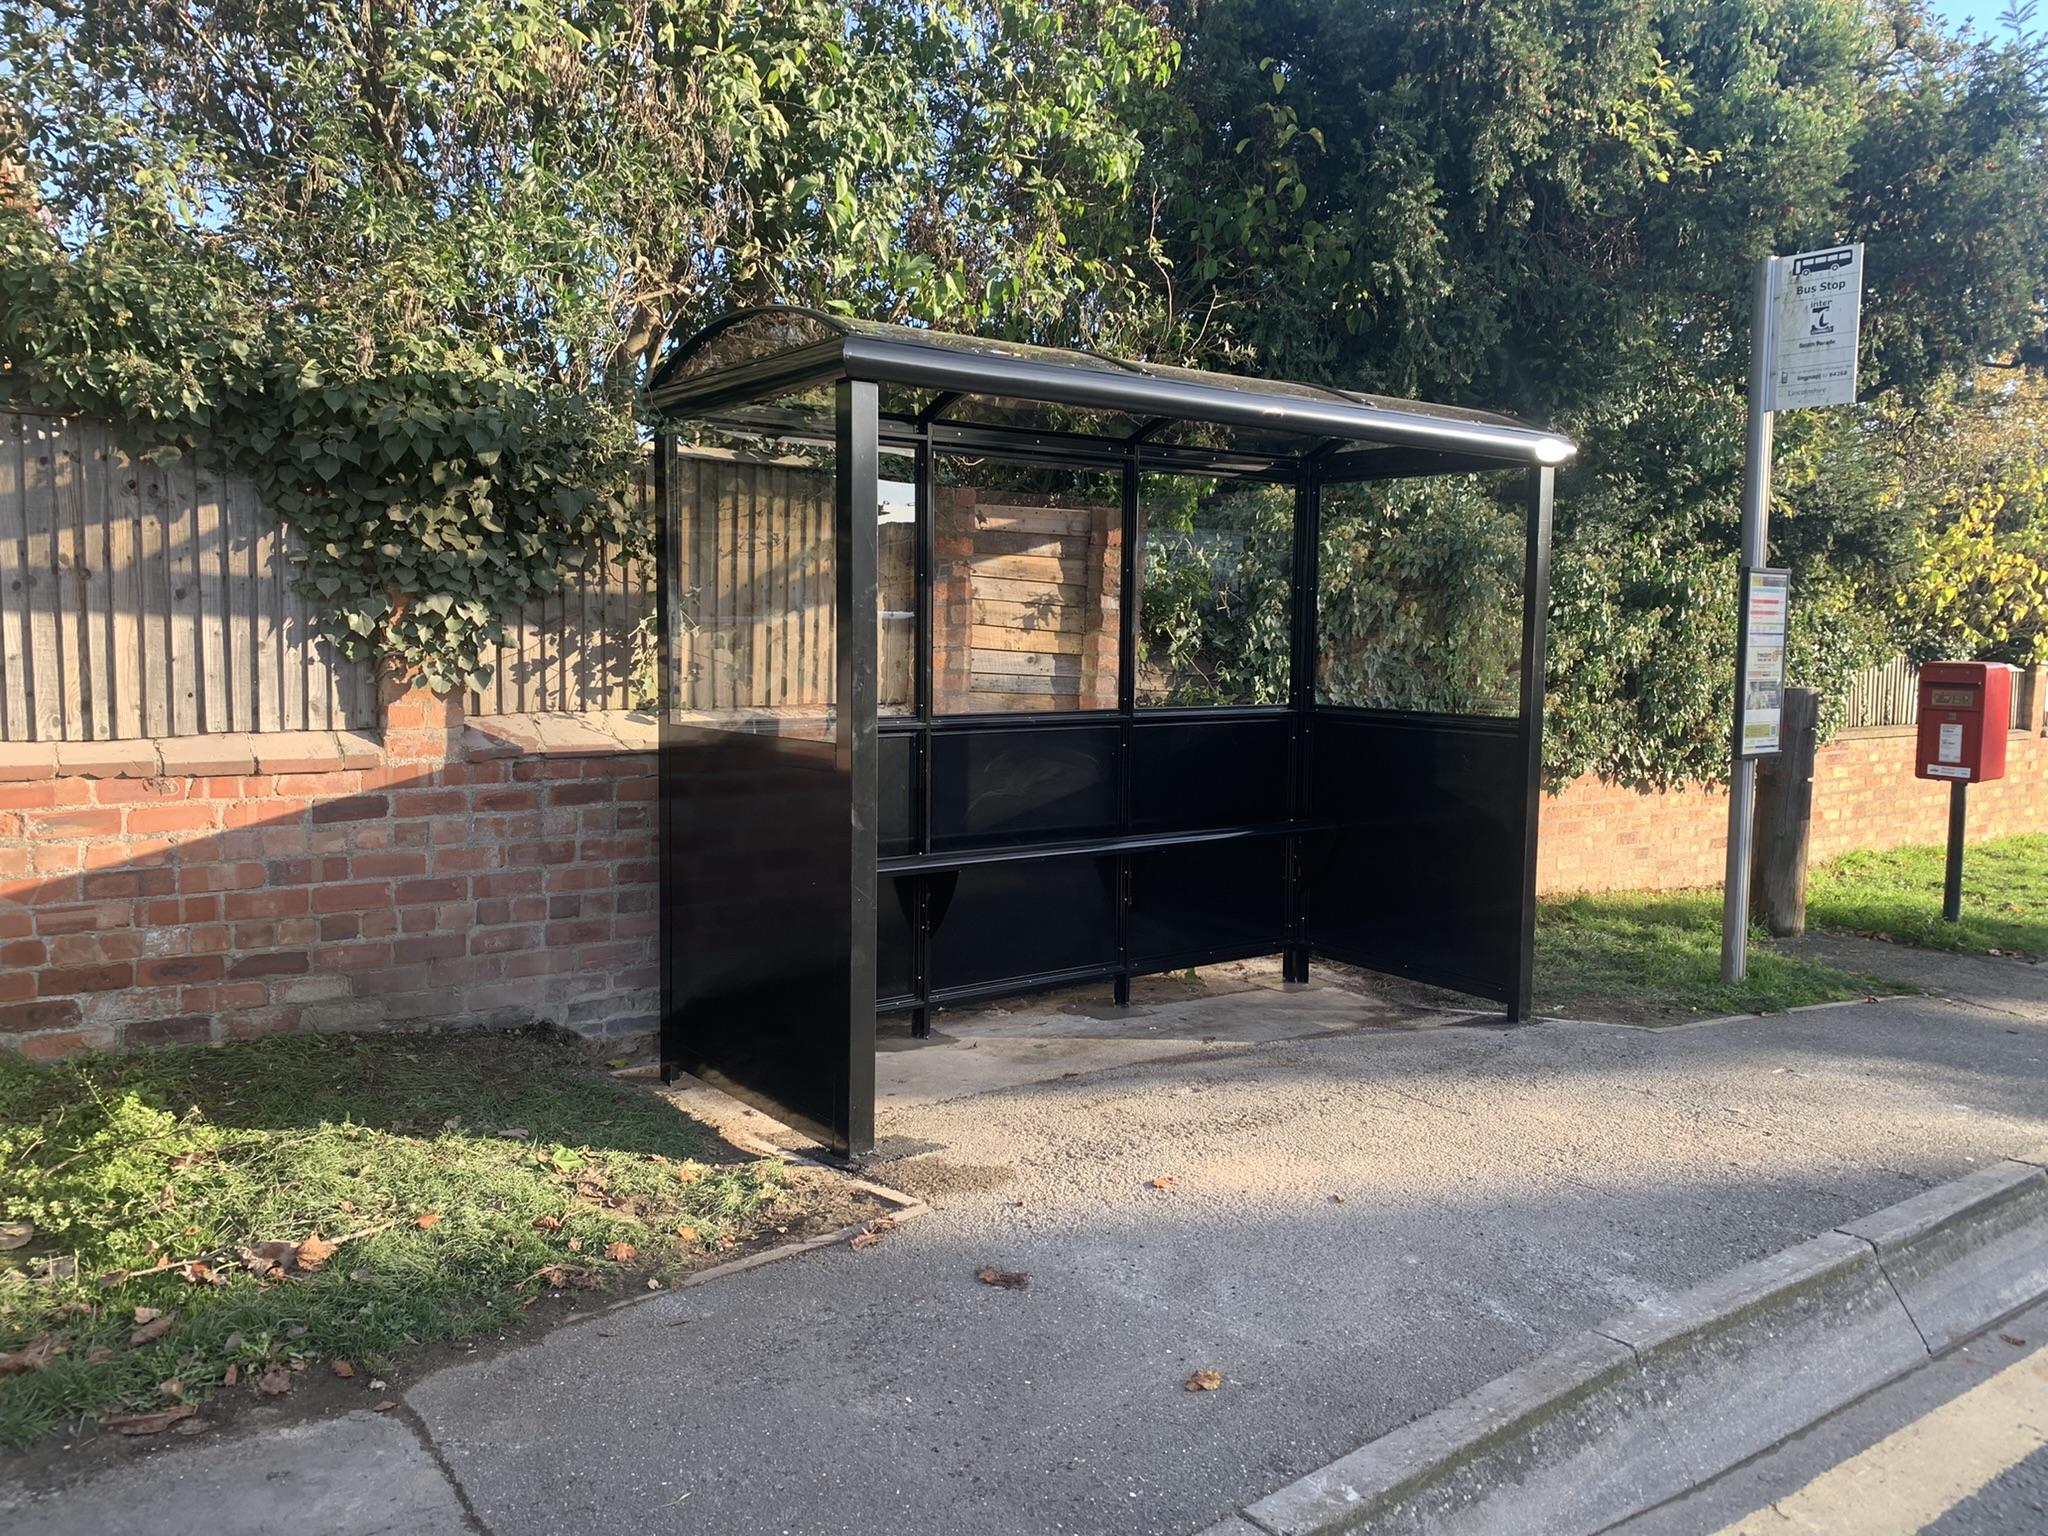 New Bus Shelter